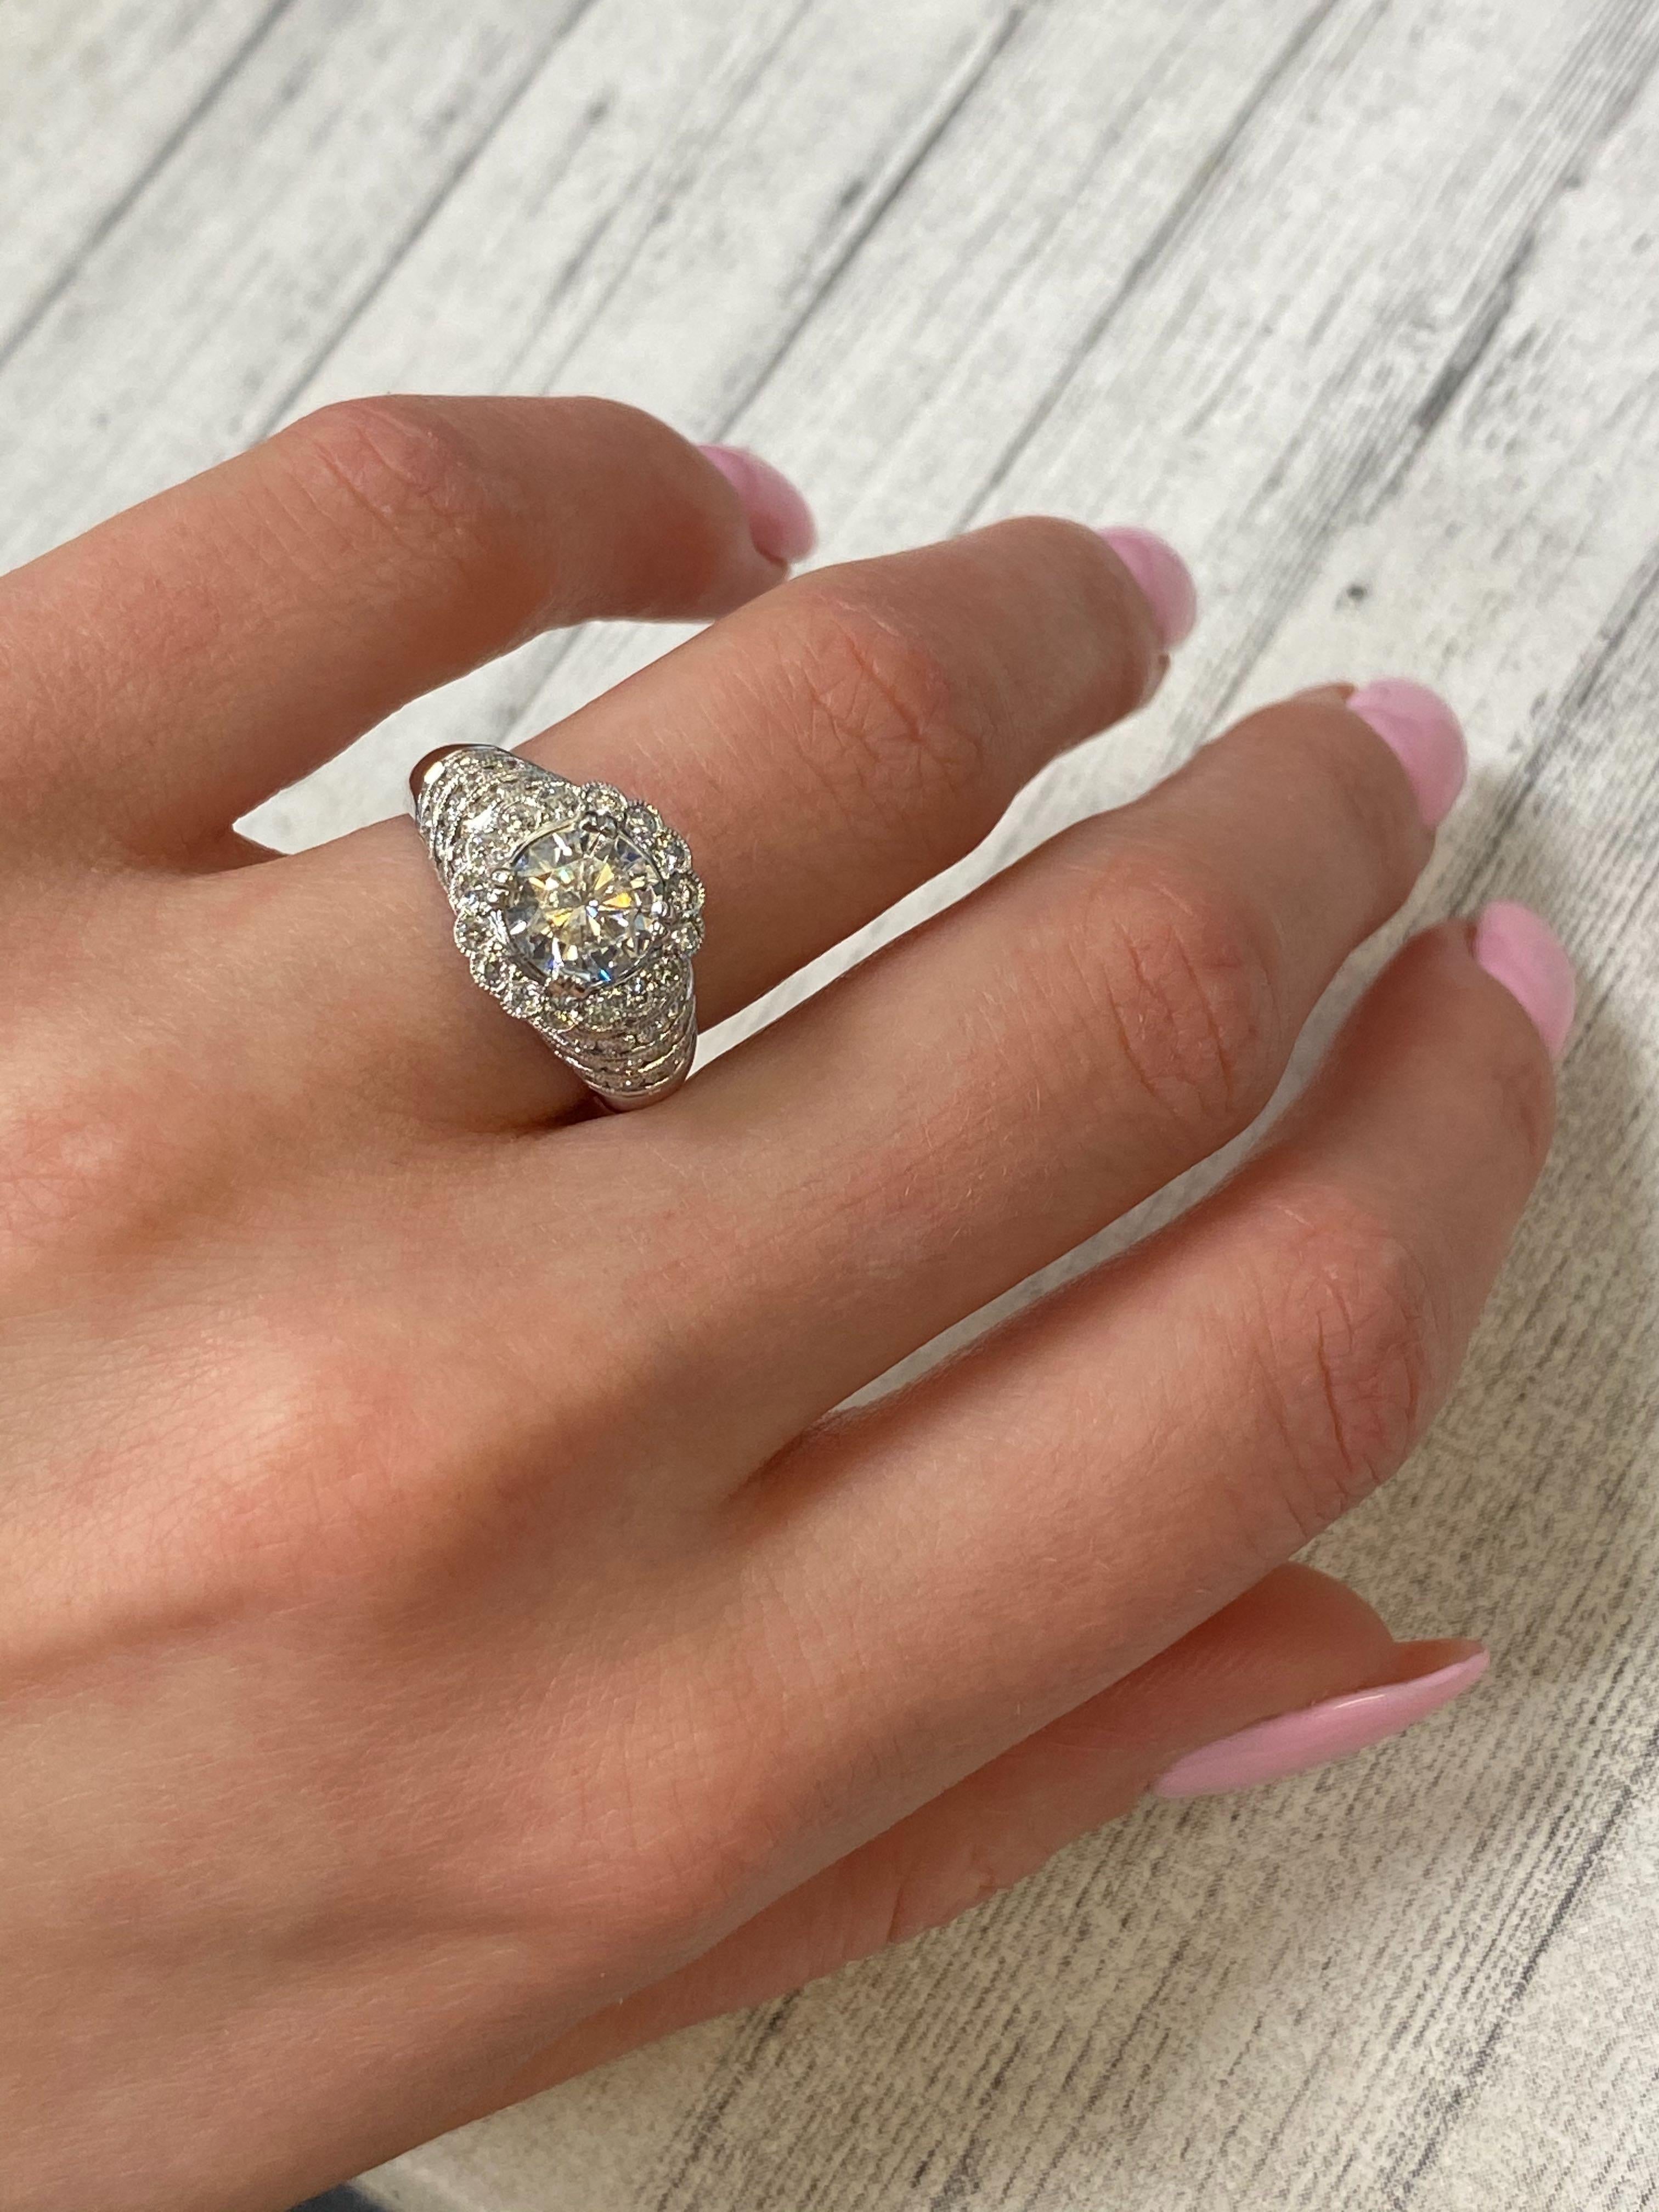 Rachel Koen 18 Karat White Gold Round Cut Diamond Engagement Ring 2.73 Carat For Sale 1